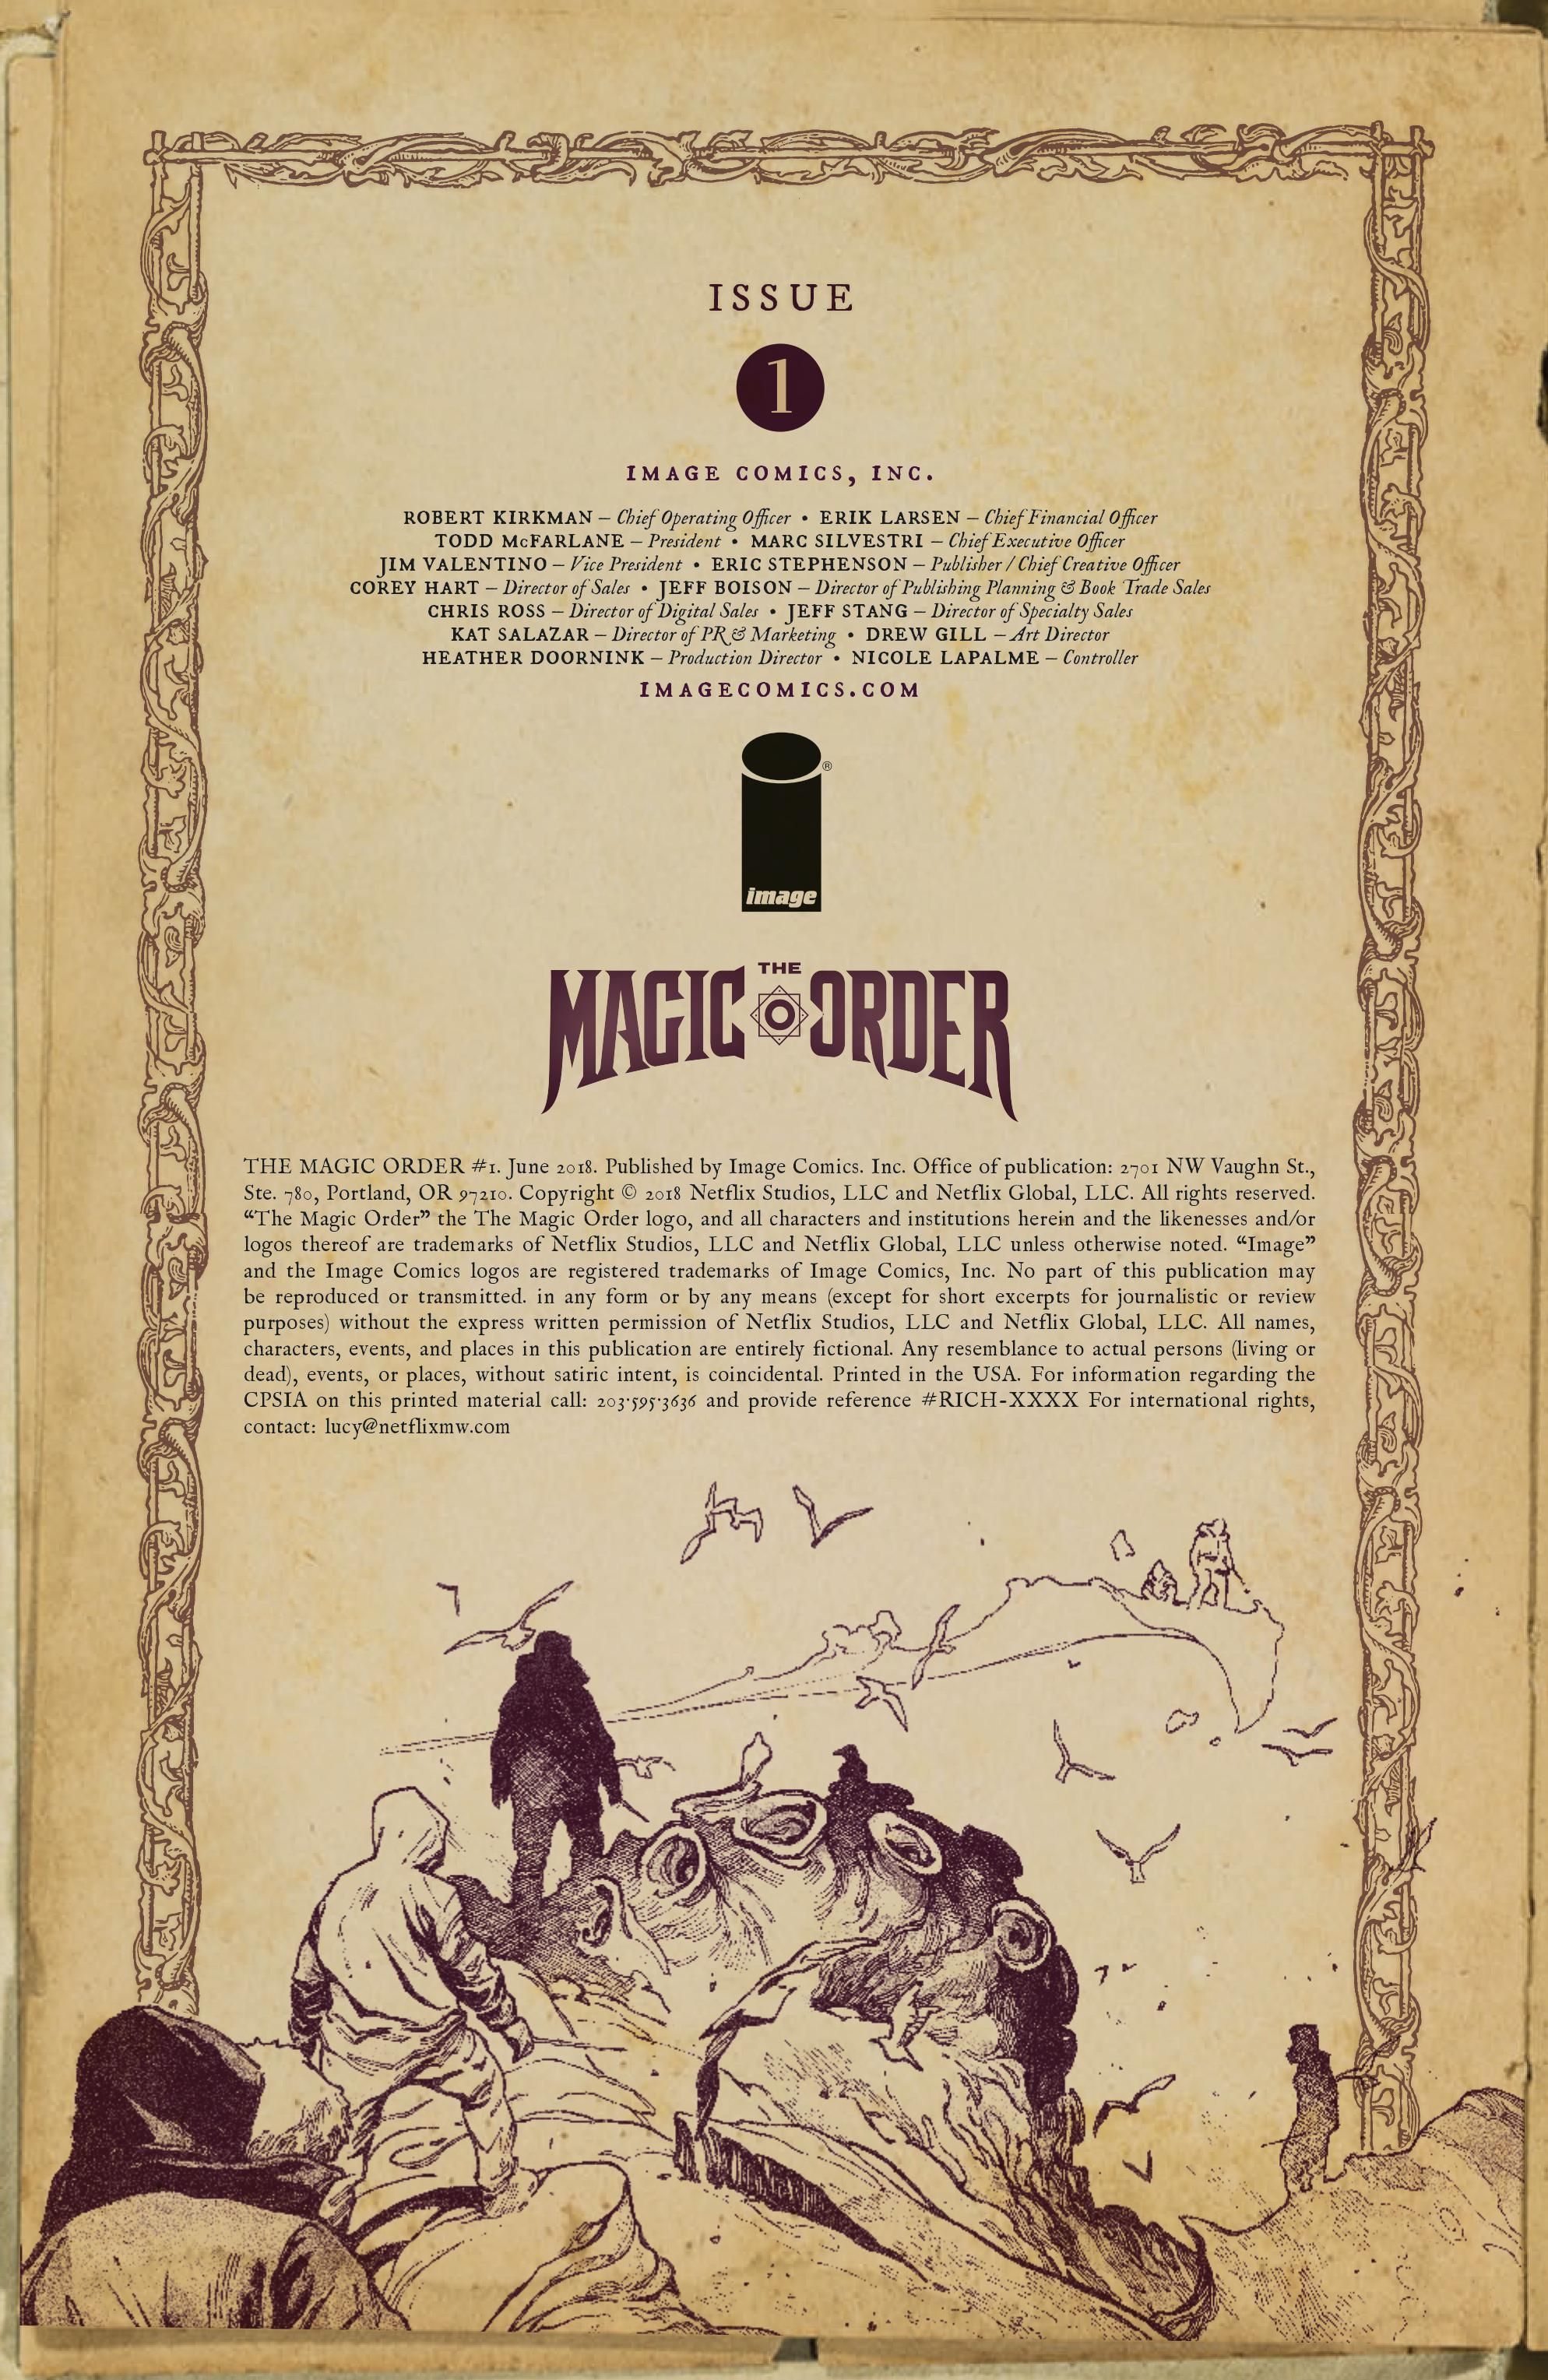 Magic order